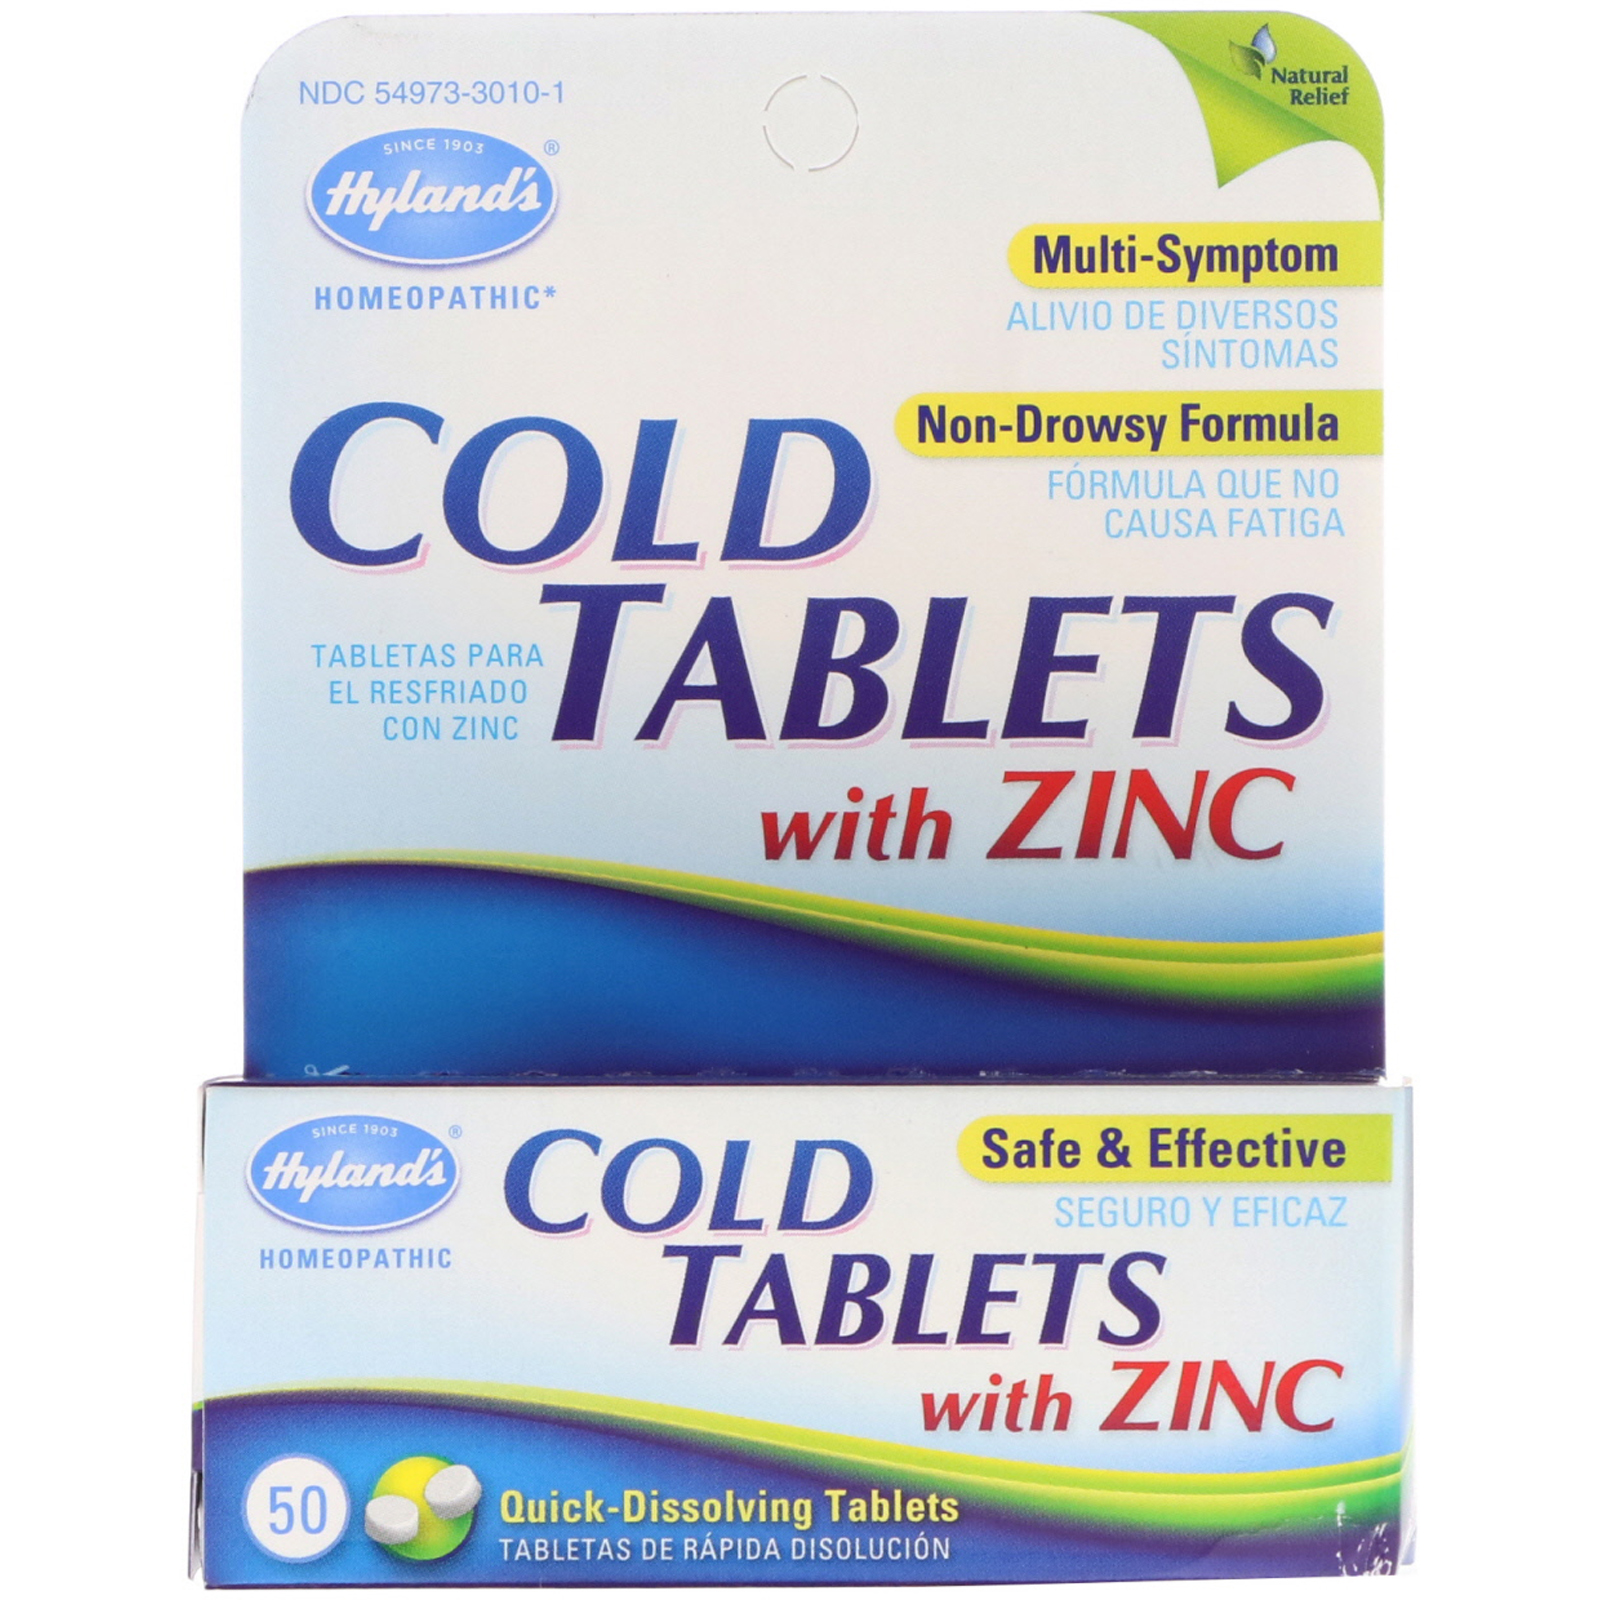 Clear cold. Cold таблетки. Колд грипп таблетка. Wincold таблетки. Cold Tablets от сонливости.